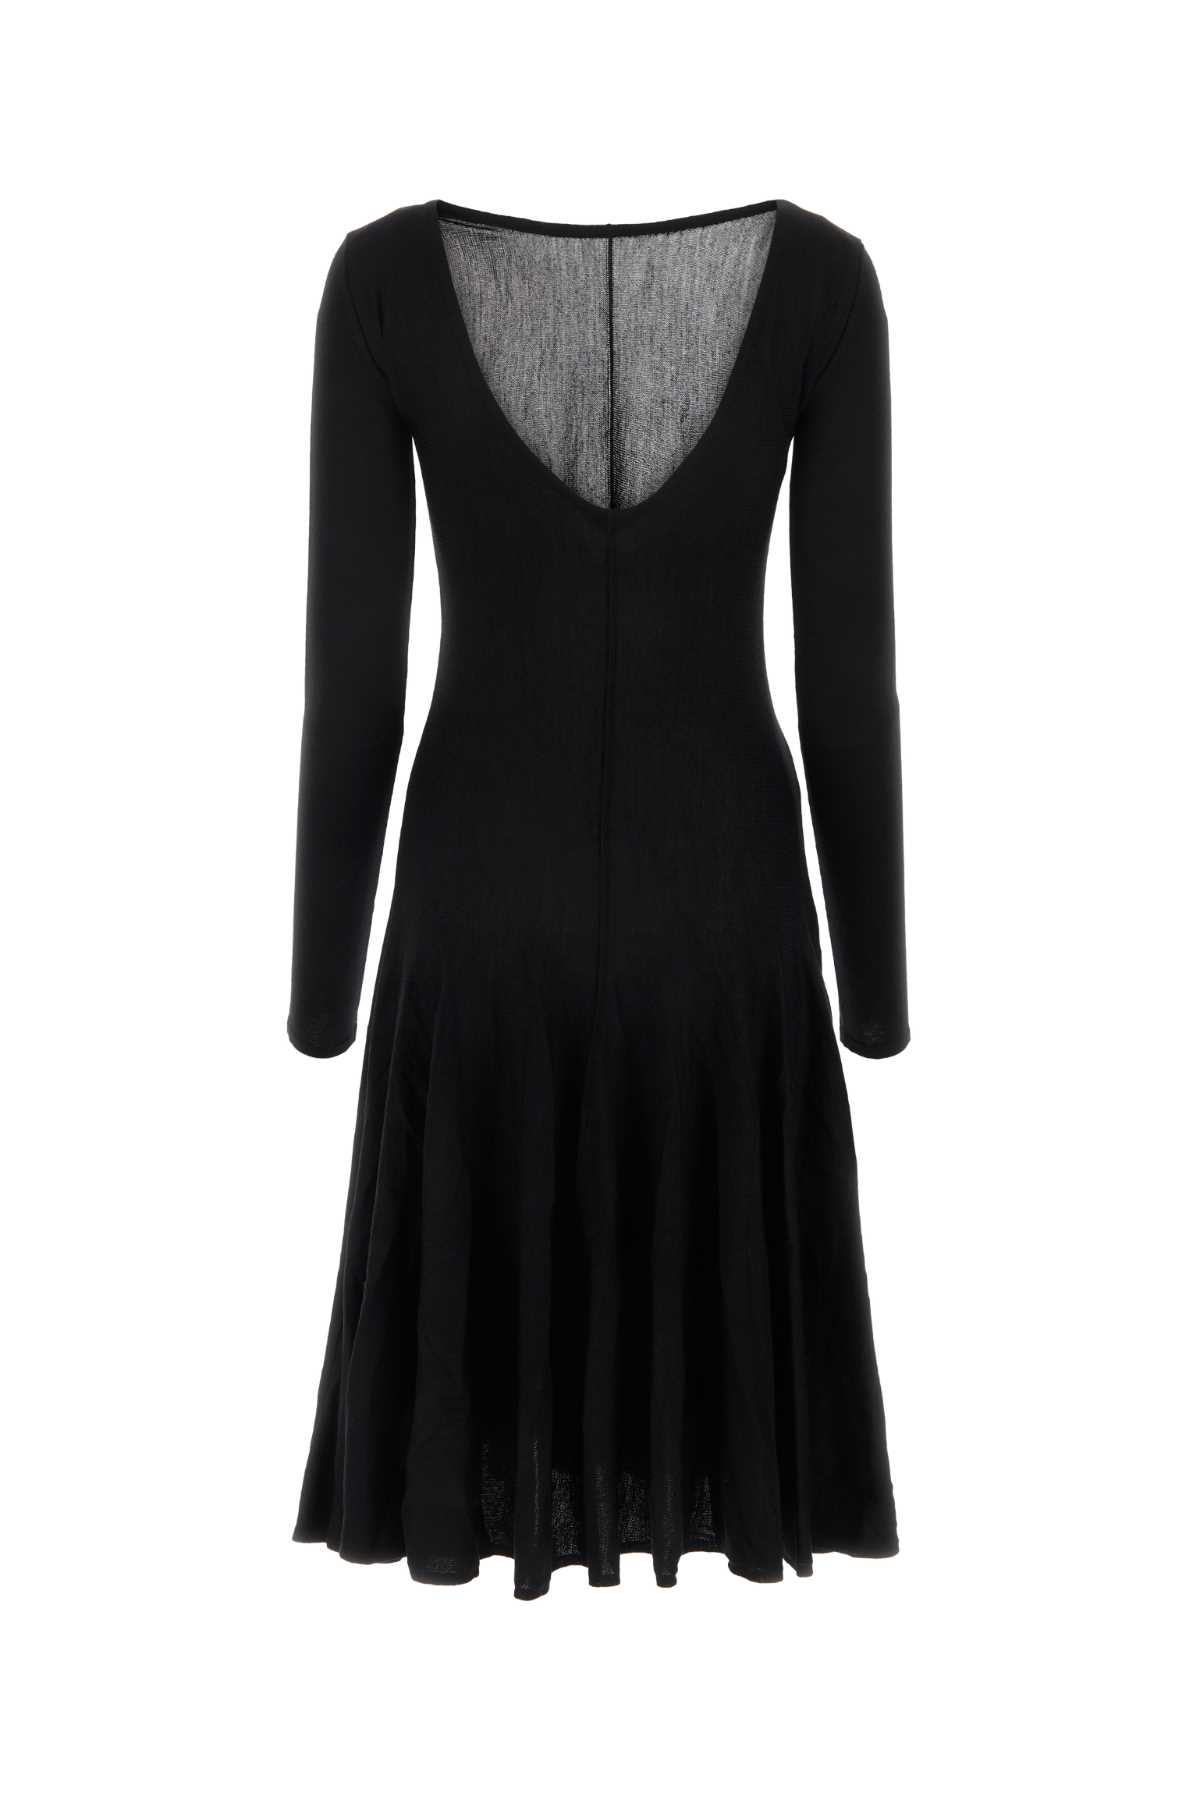 Shop Khaite Black Wool Dress